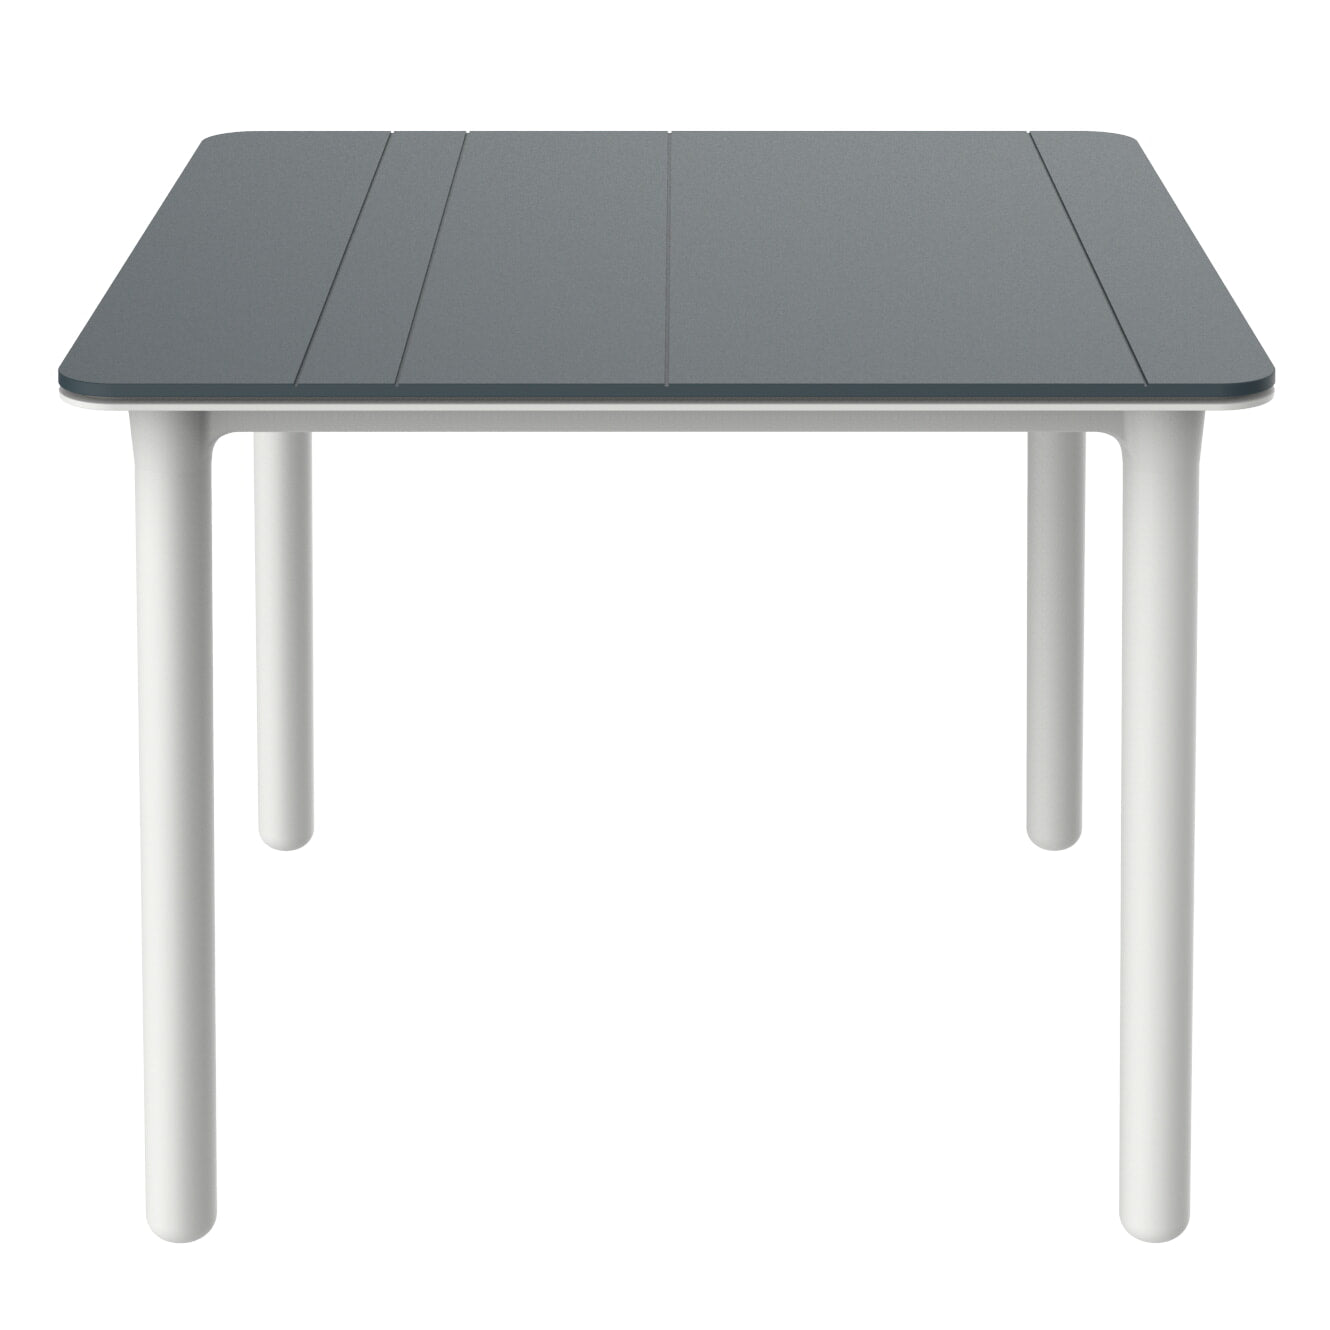 Noa vierkante tafel 90x90 wit voet gark grijs bord